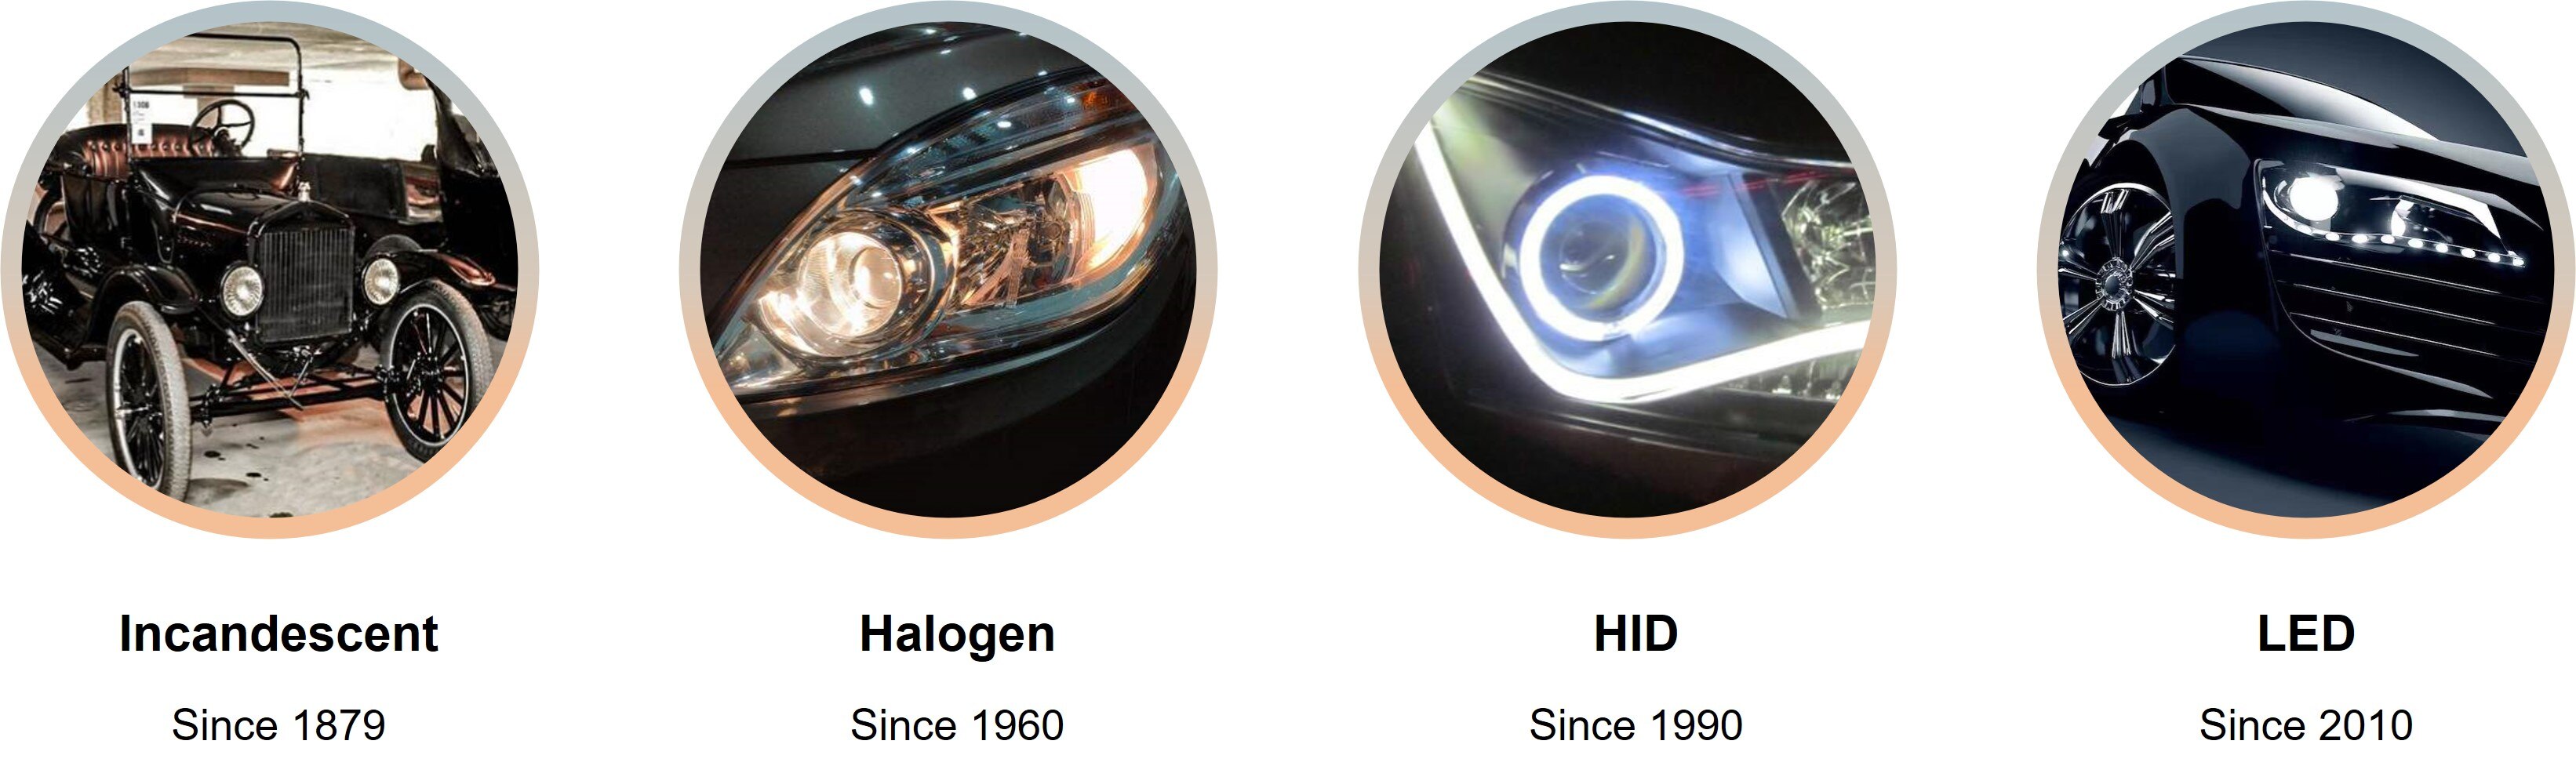 Vehicle Lighting Evolution